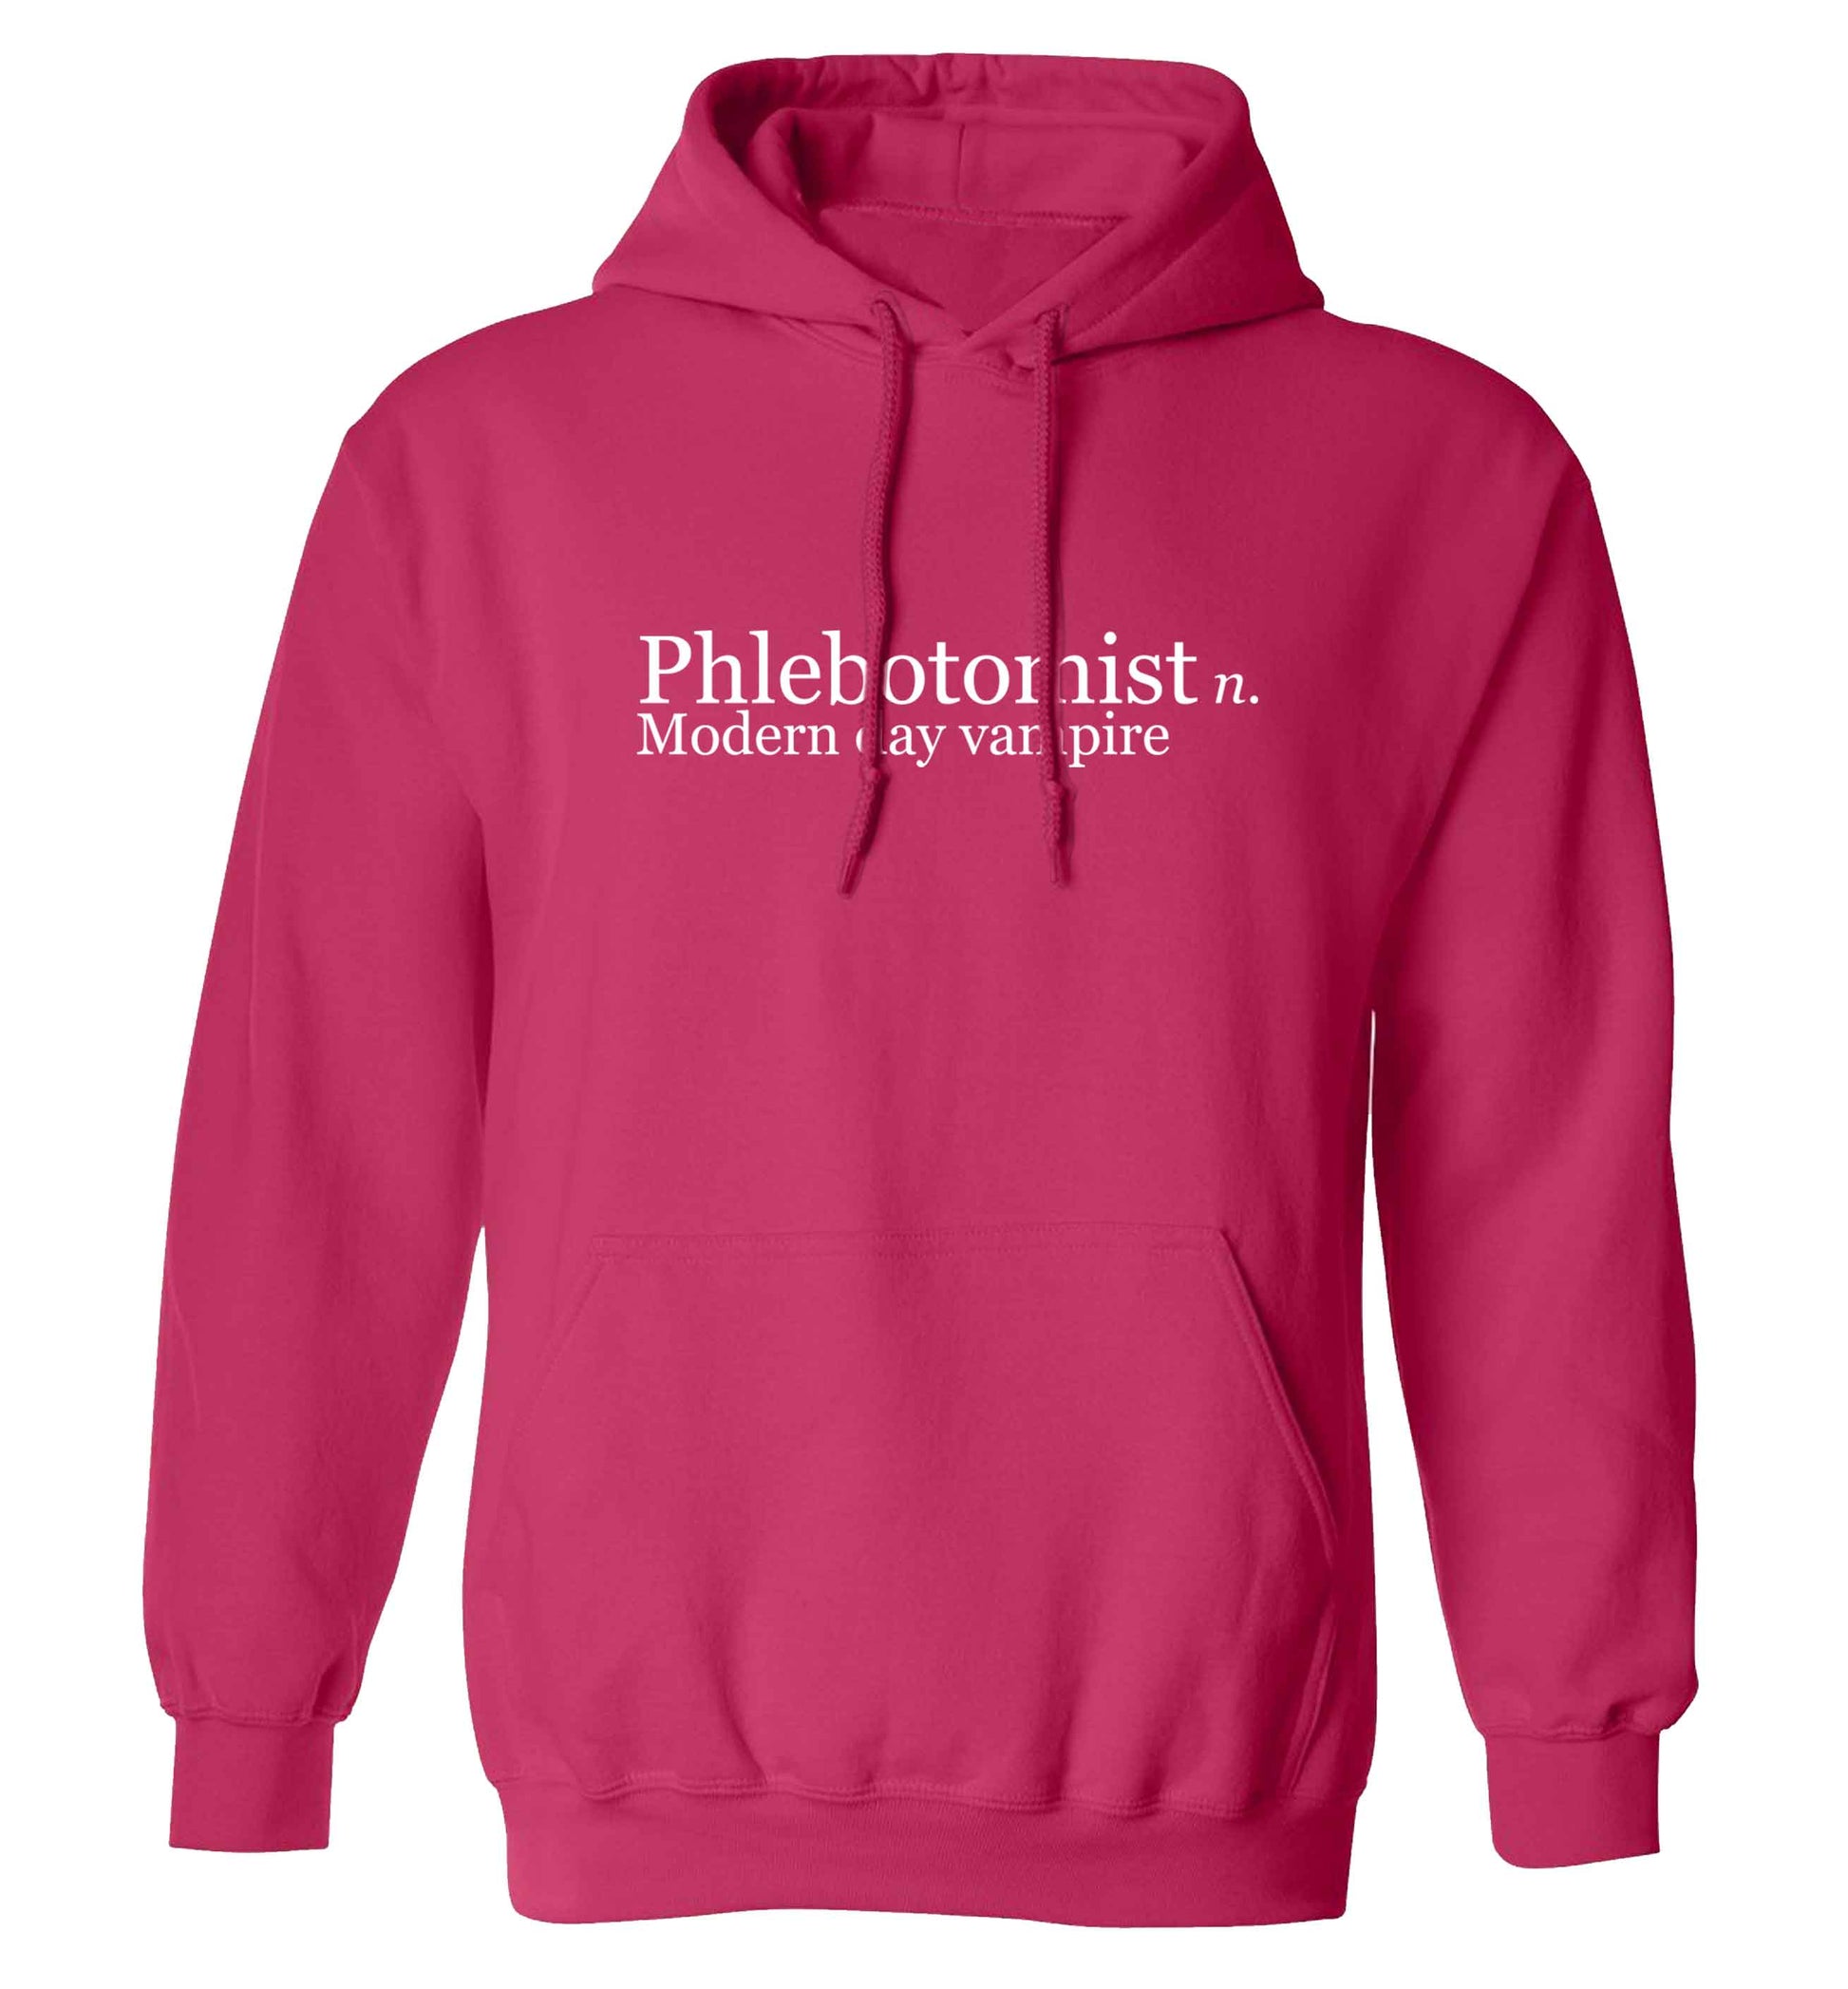 Phlebotomist - Modern day vampire adults unisex pink hoodie 2XL